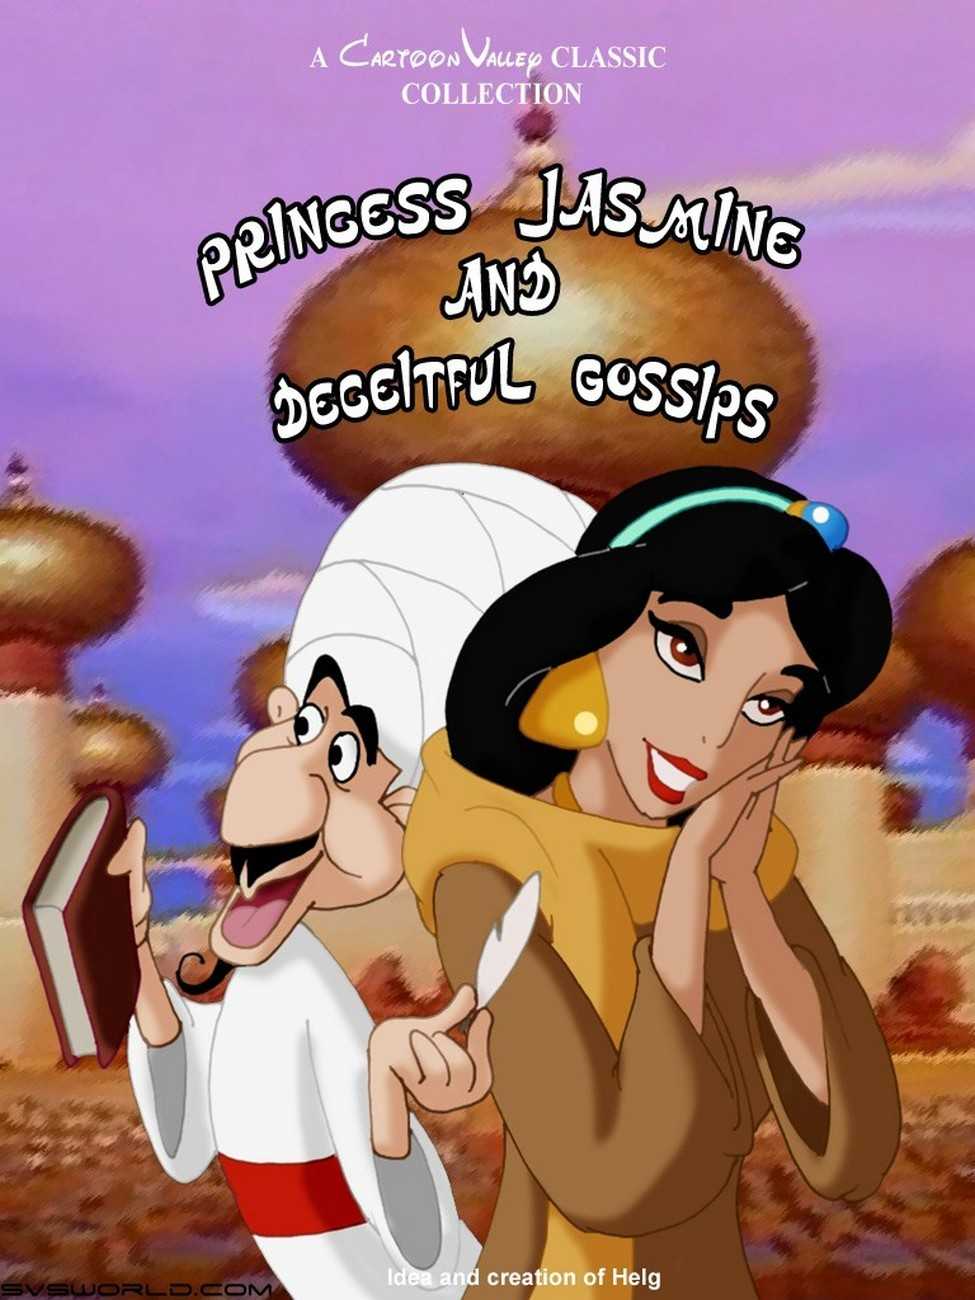 Princess Jasmine And Deceitful Gossips page 1